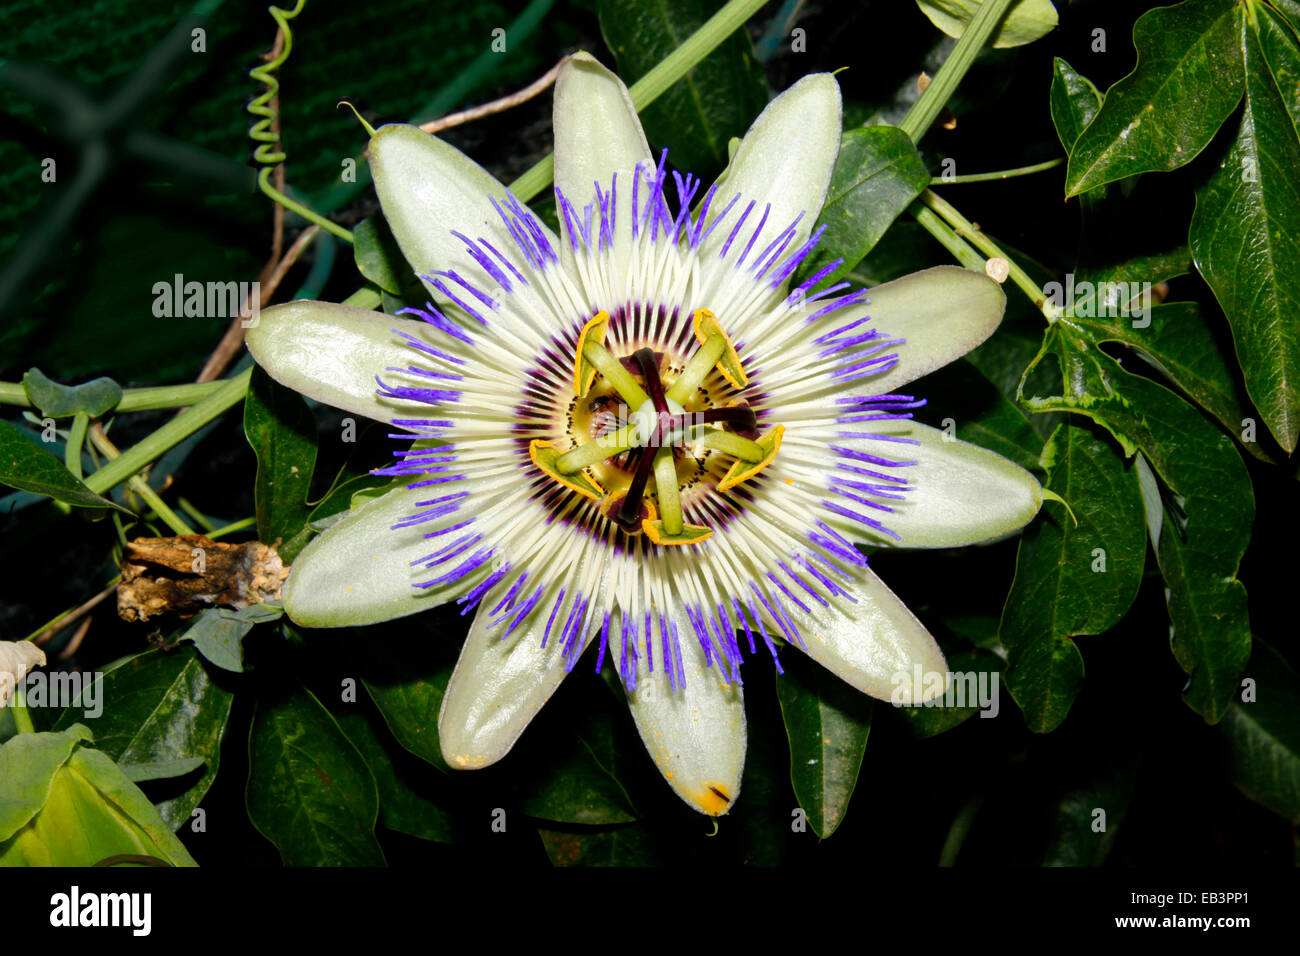 Blue passion flower or Common passion flower (Passiflora caerulea) Stock Photo